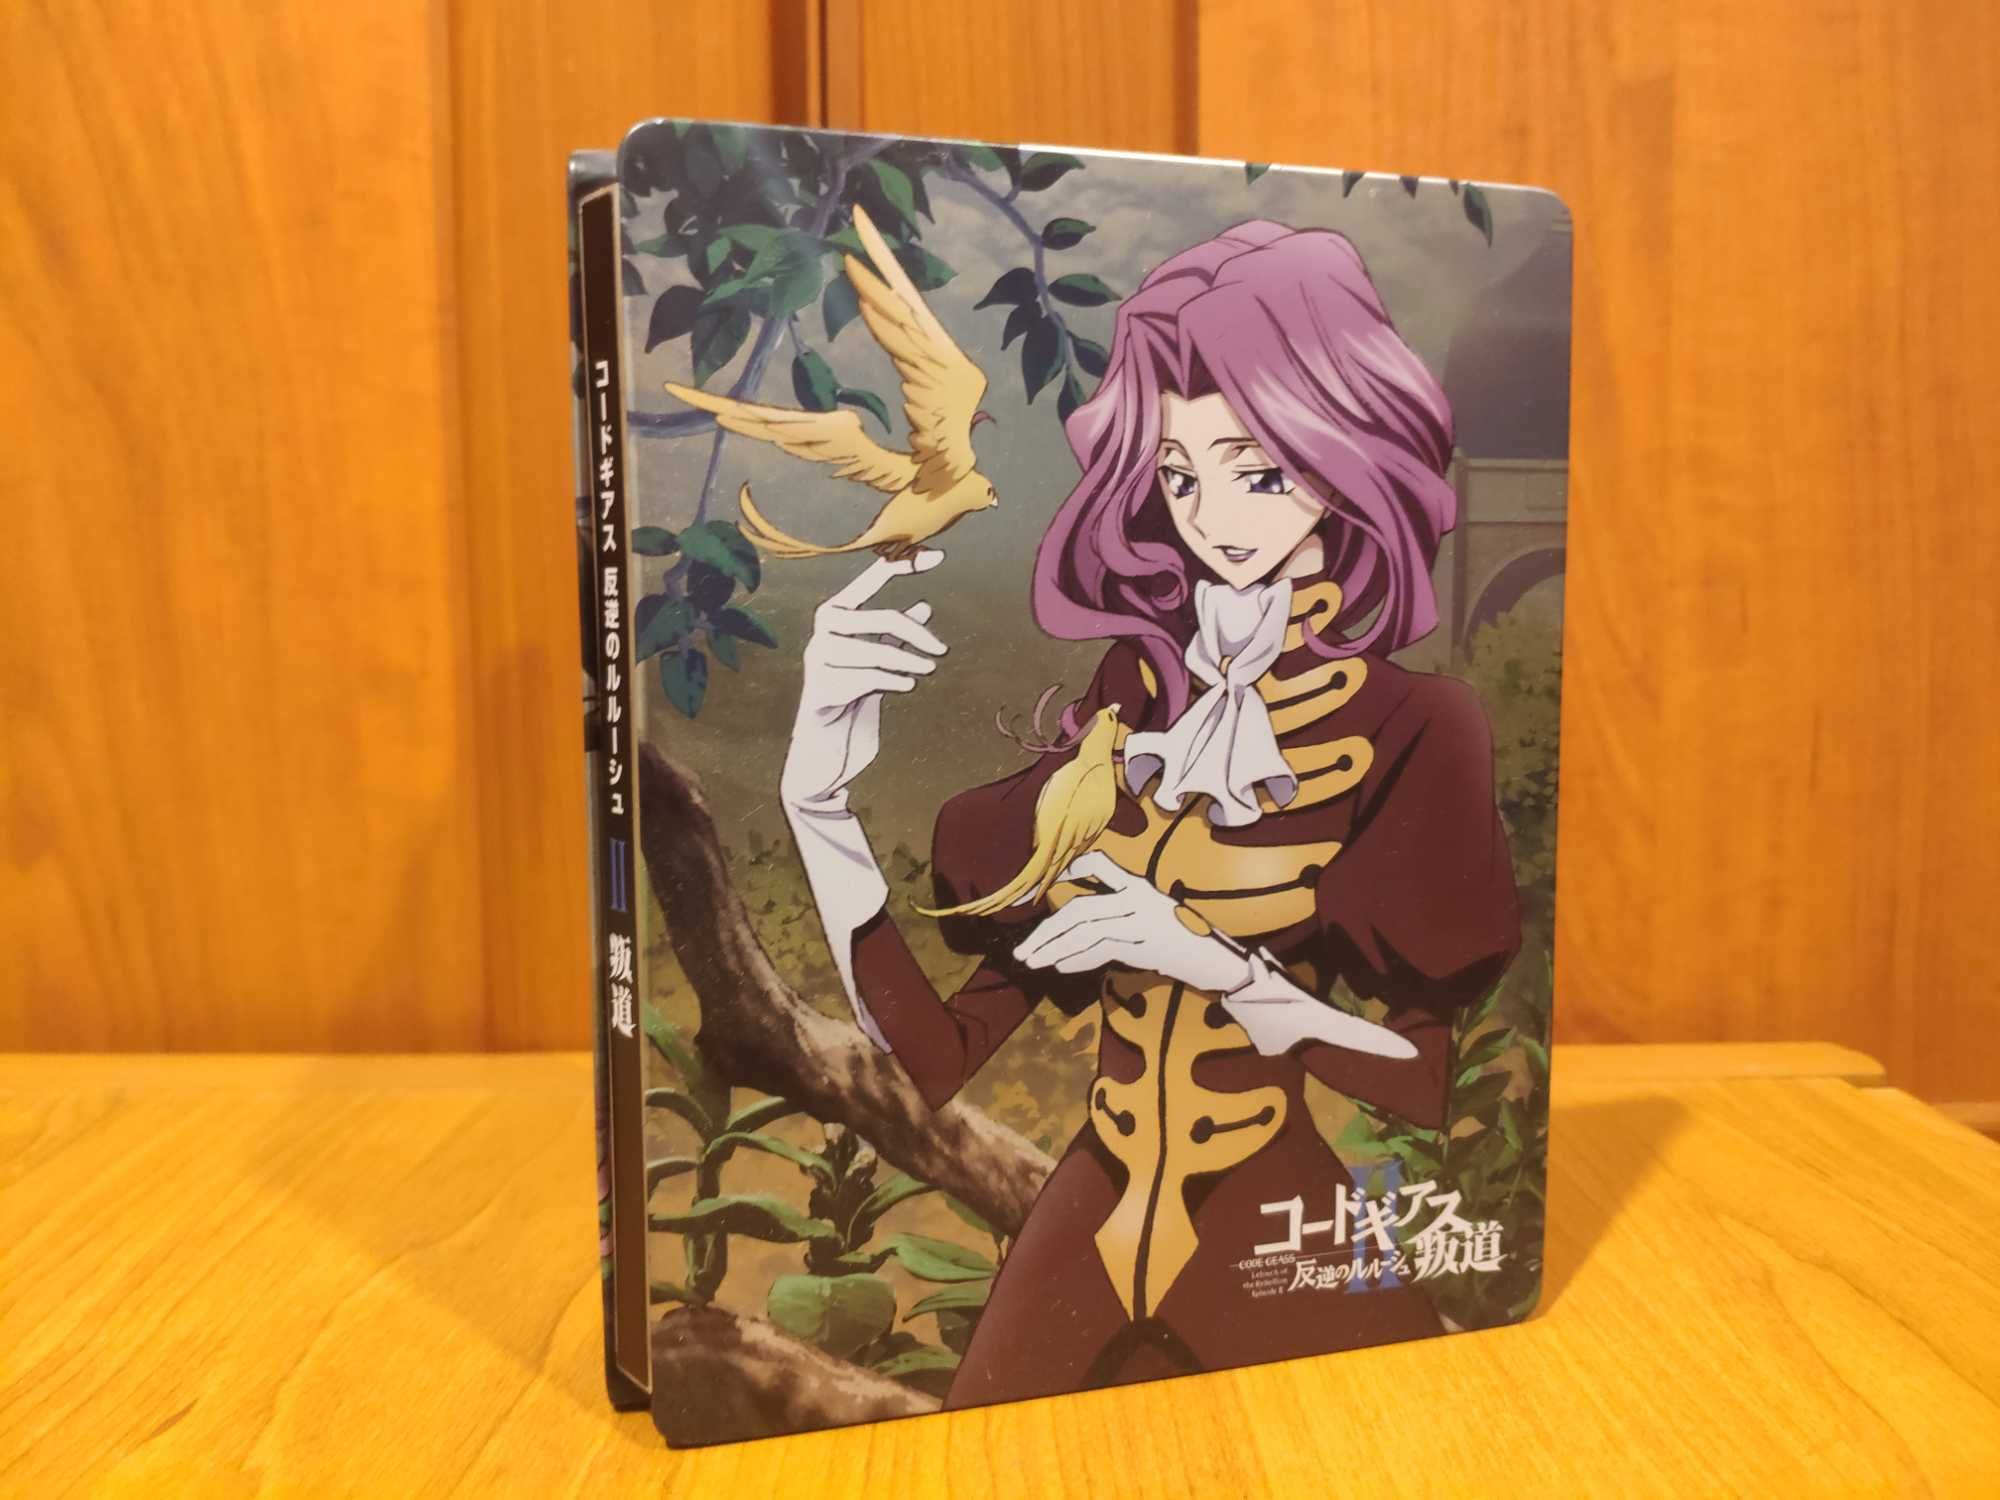 Steelbook Anime Code Geass: Lelouch of the Rebellion II Transgression